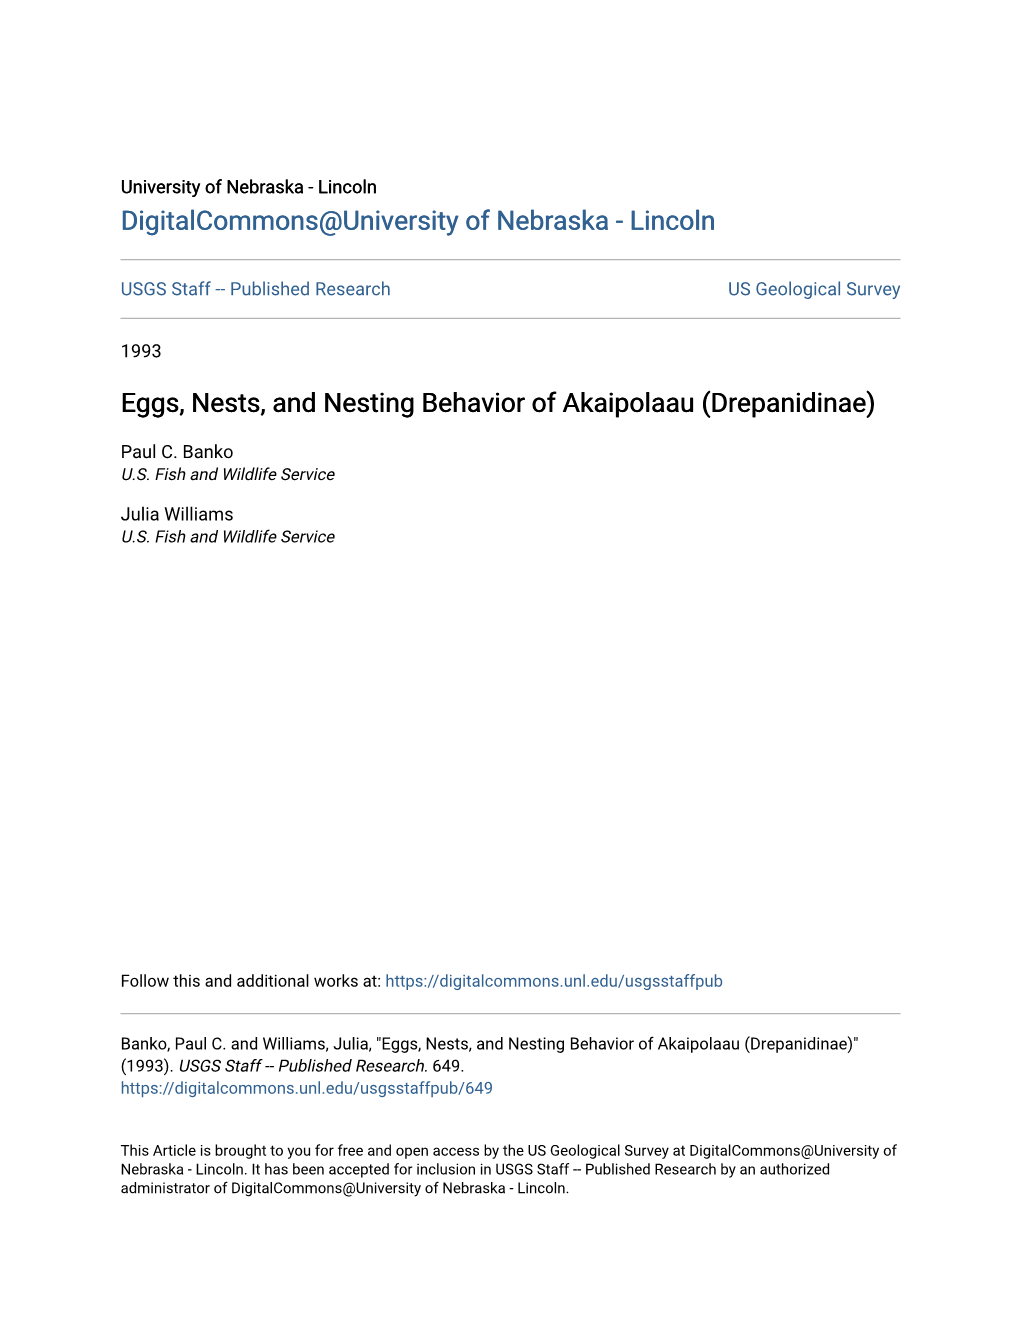 Eggs, Nests, and Nesting Behavior of Akaipolaau (Drepanidinae)